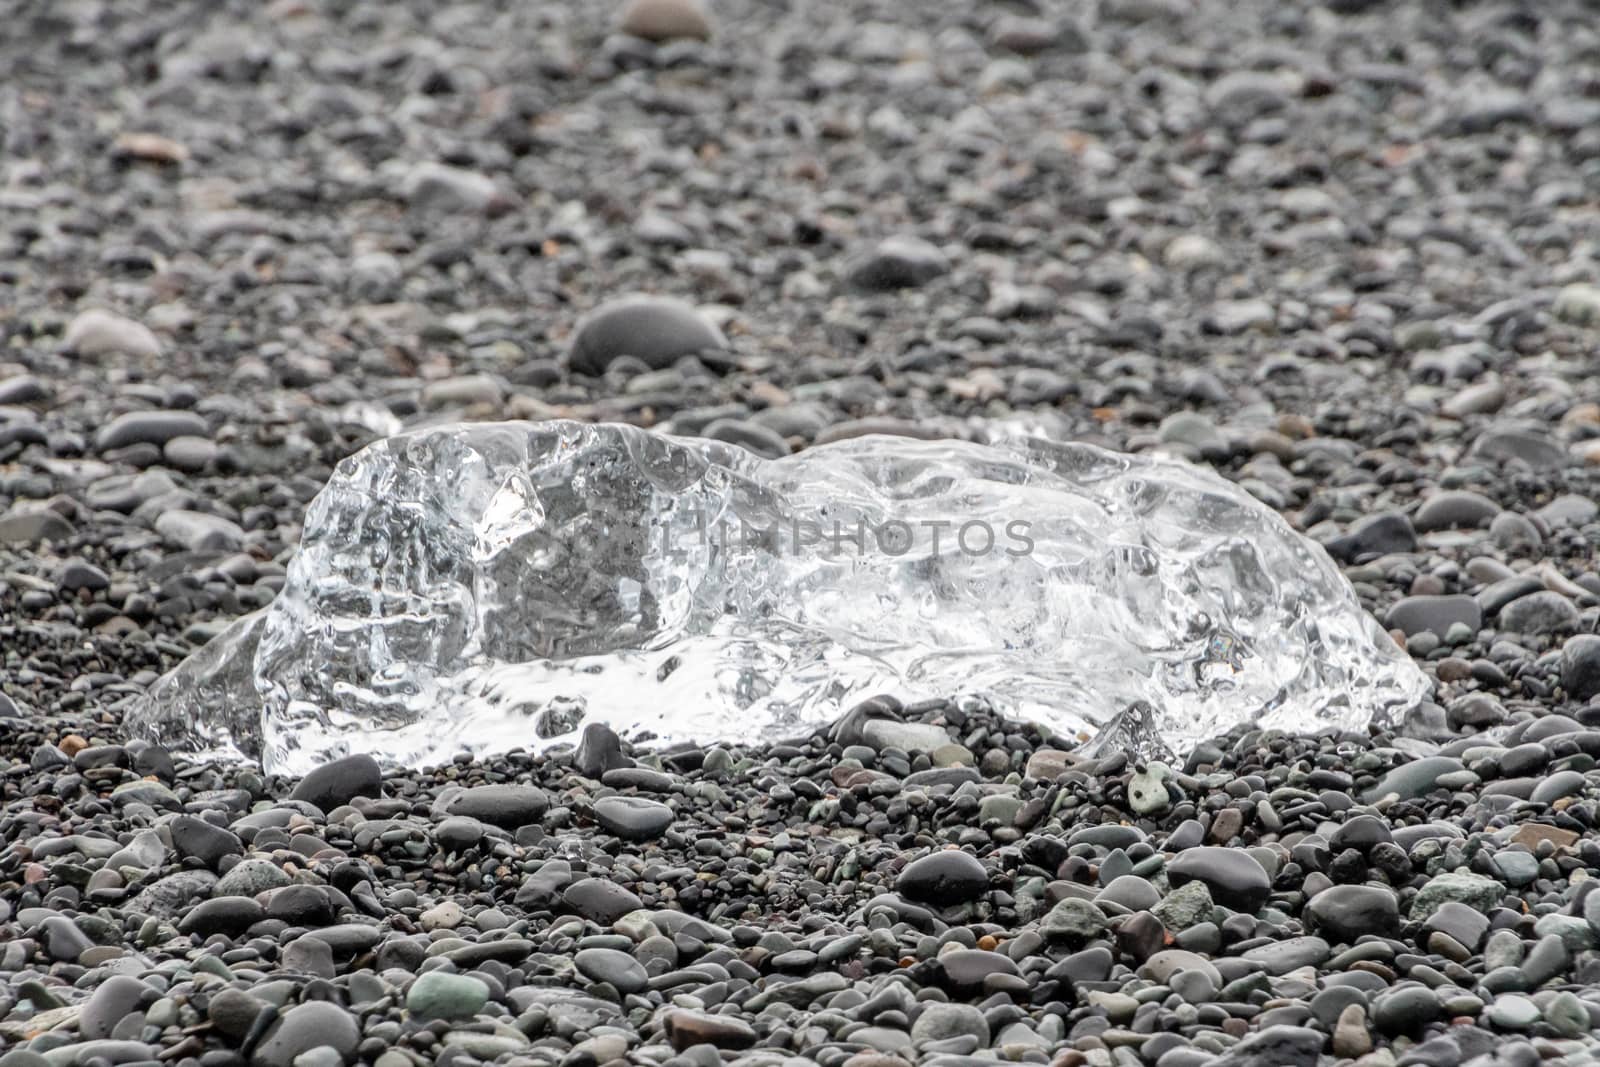 Diamond beach black sand crystal clear piece of ice lying on dark round rocks